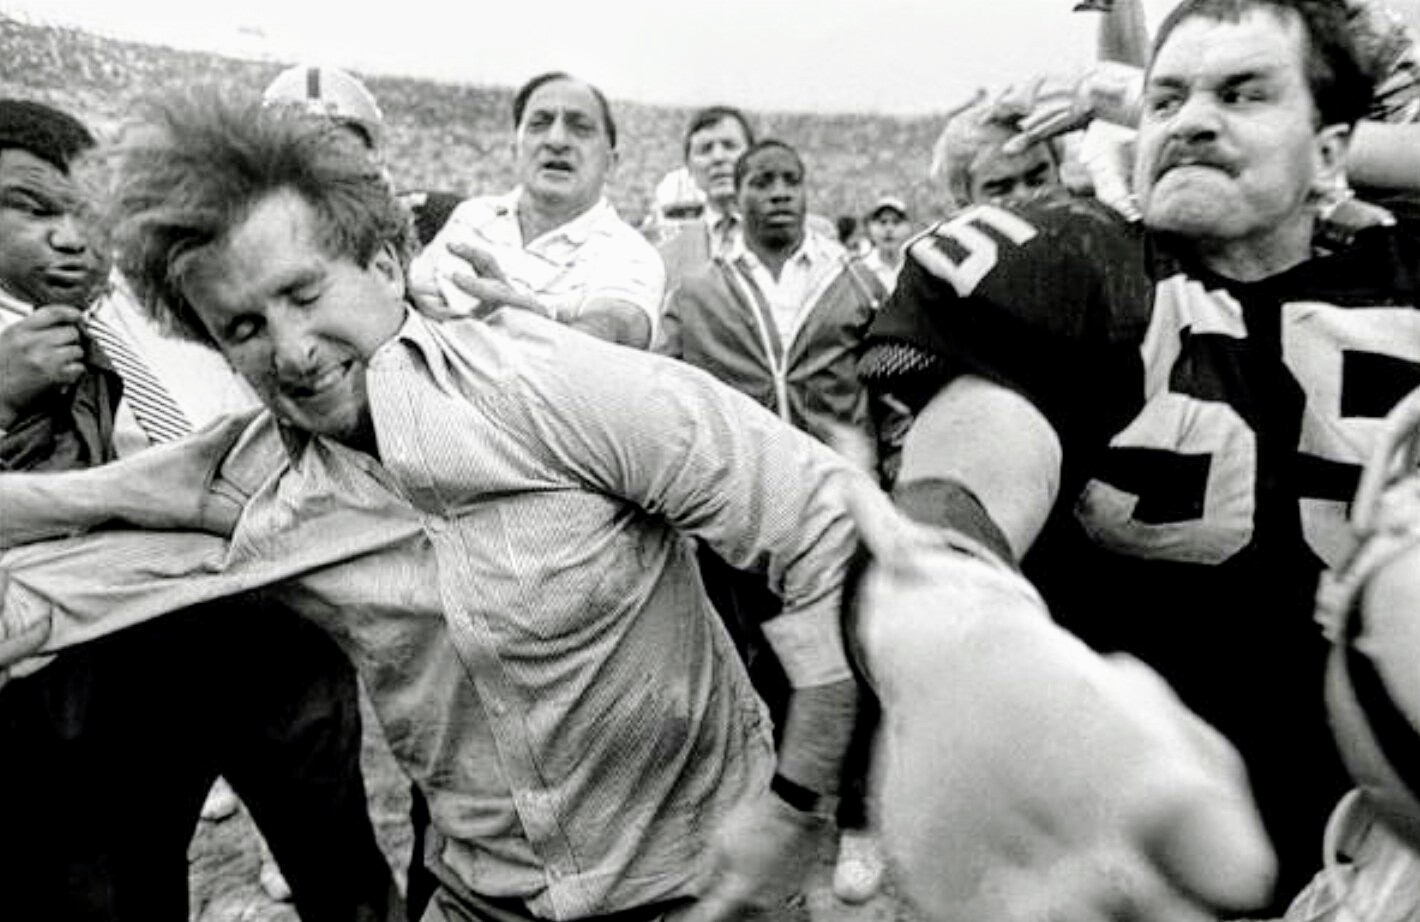 Old Time Football ? on Twitter: "January 5, 1986 Matt Millen punches  #Patriots GM Pat Sullivan. Matt tells his side of the story #Raiders  https://t.co/OZKknNkSE9" / Twitter